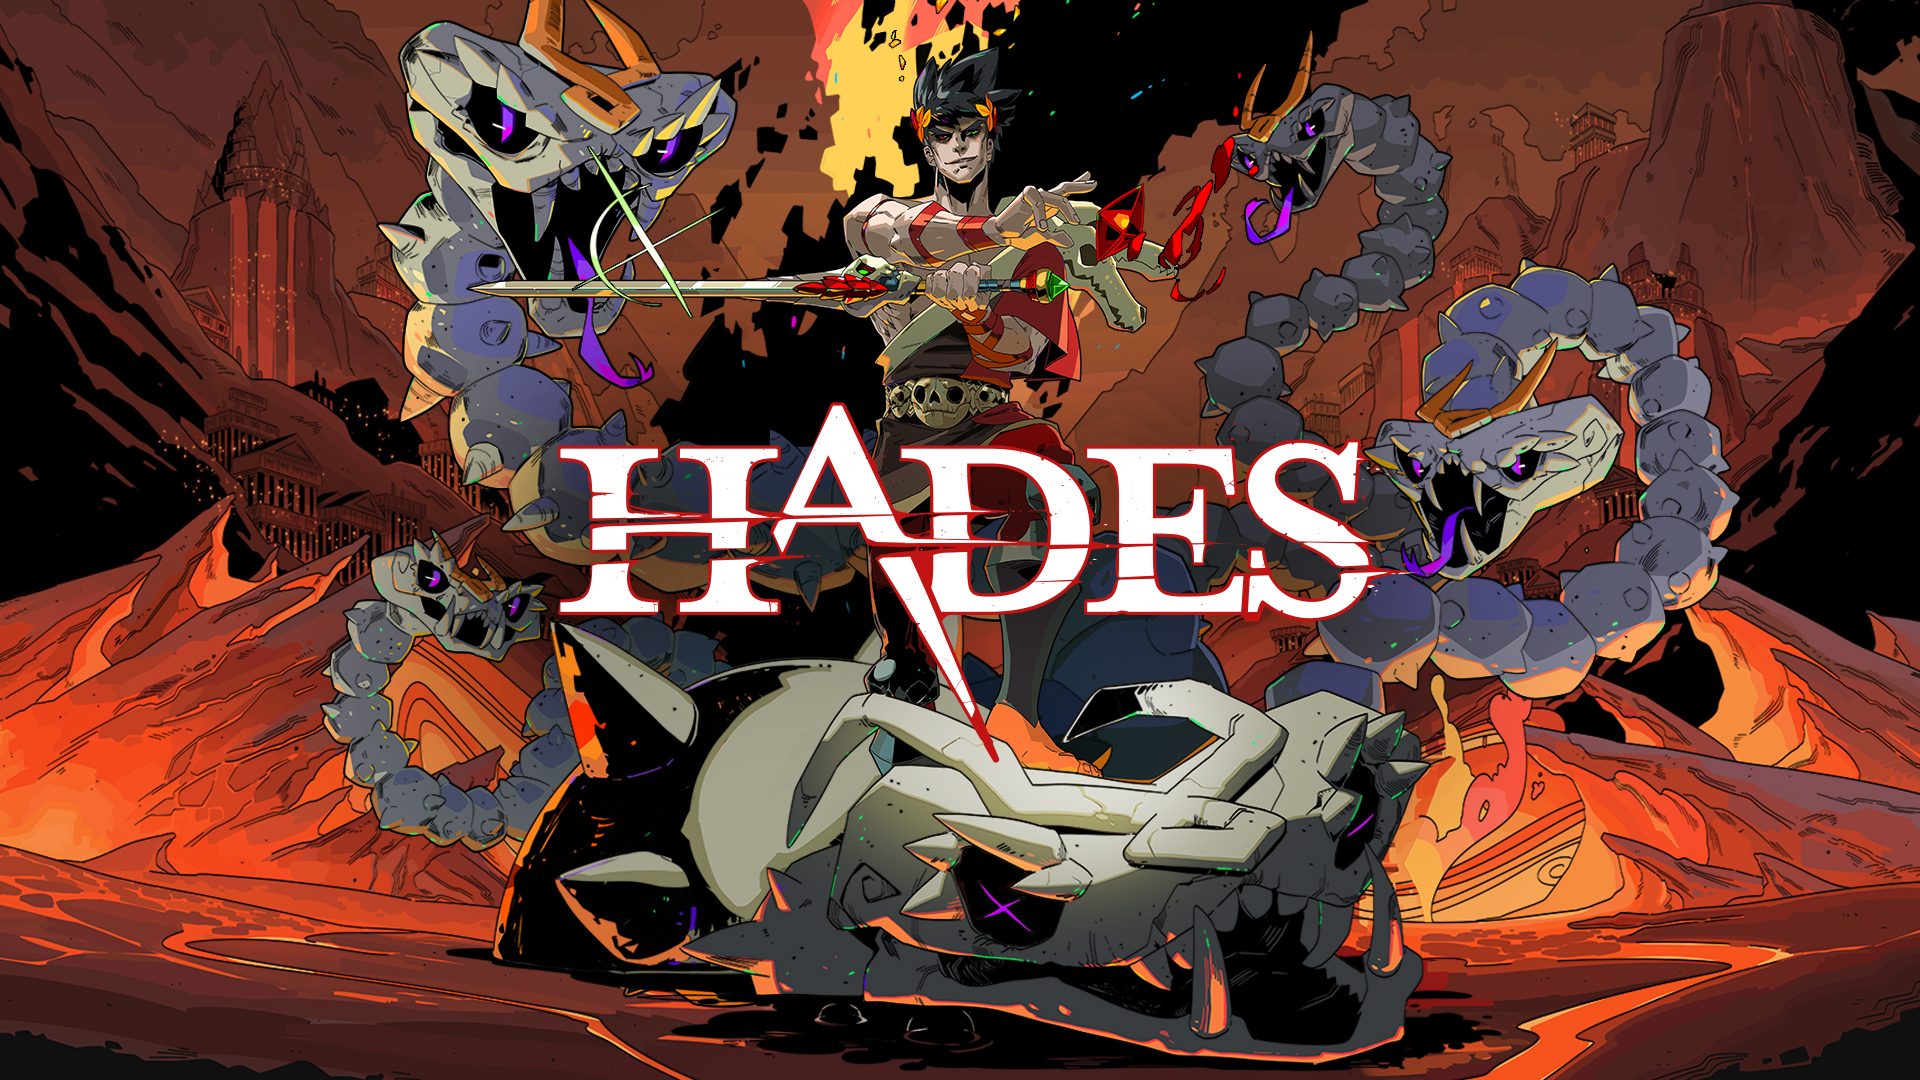 Wallpaper ID 427462  Video Game Hades Phone Wallpaper Nyx Hades  750x1334 free download